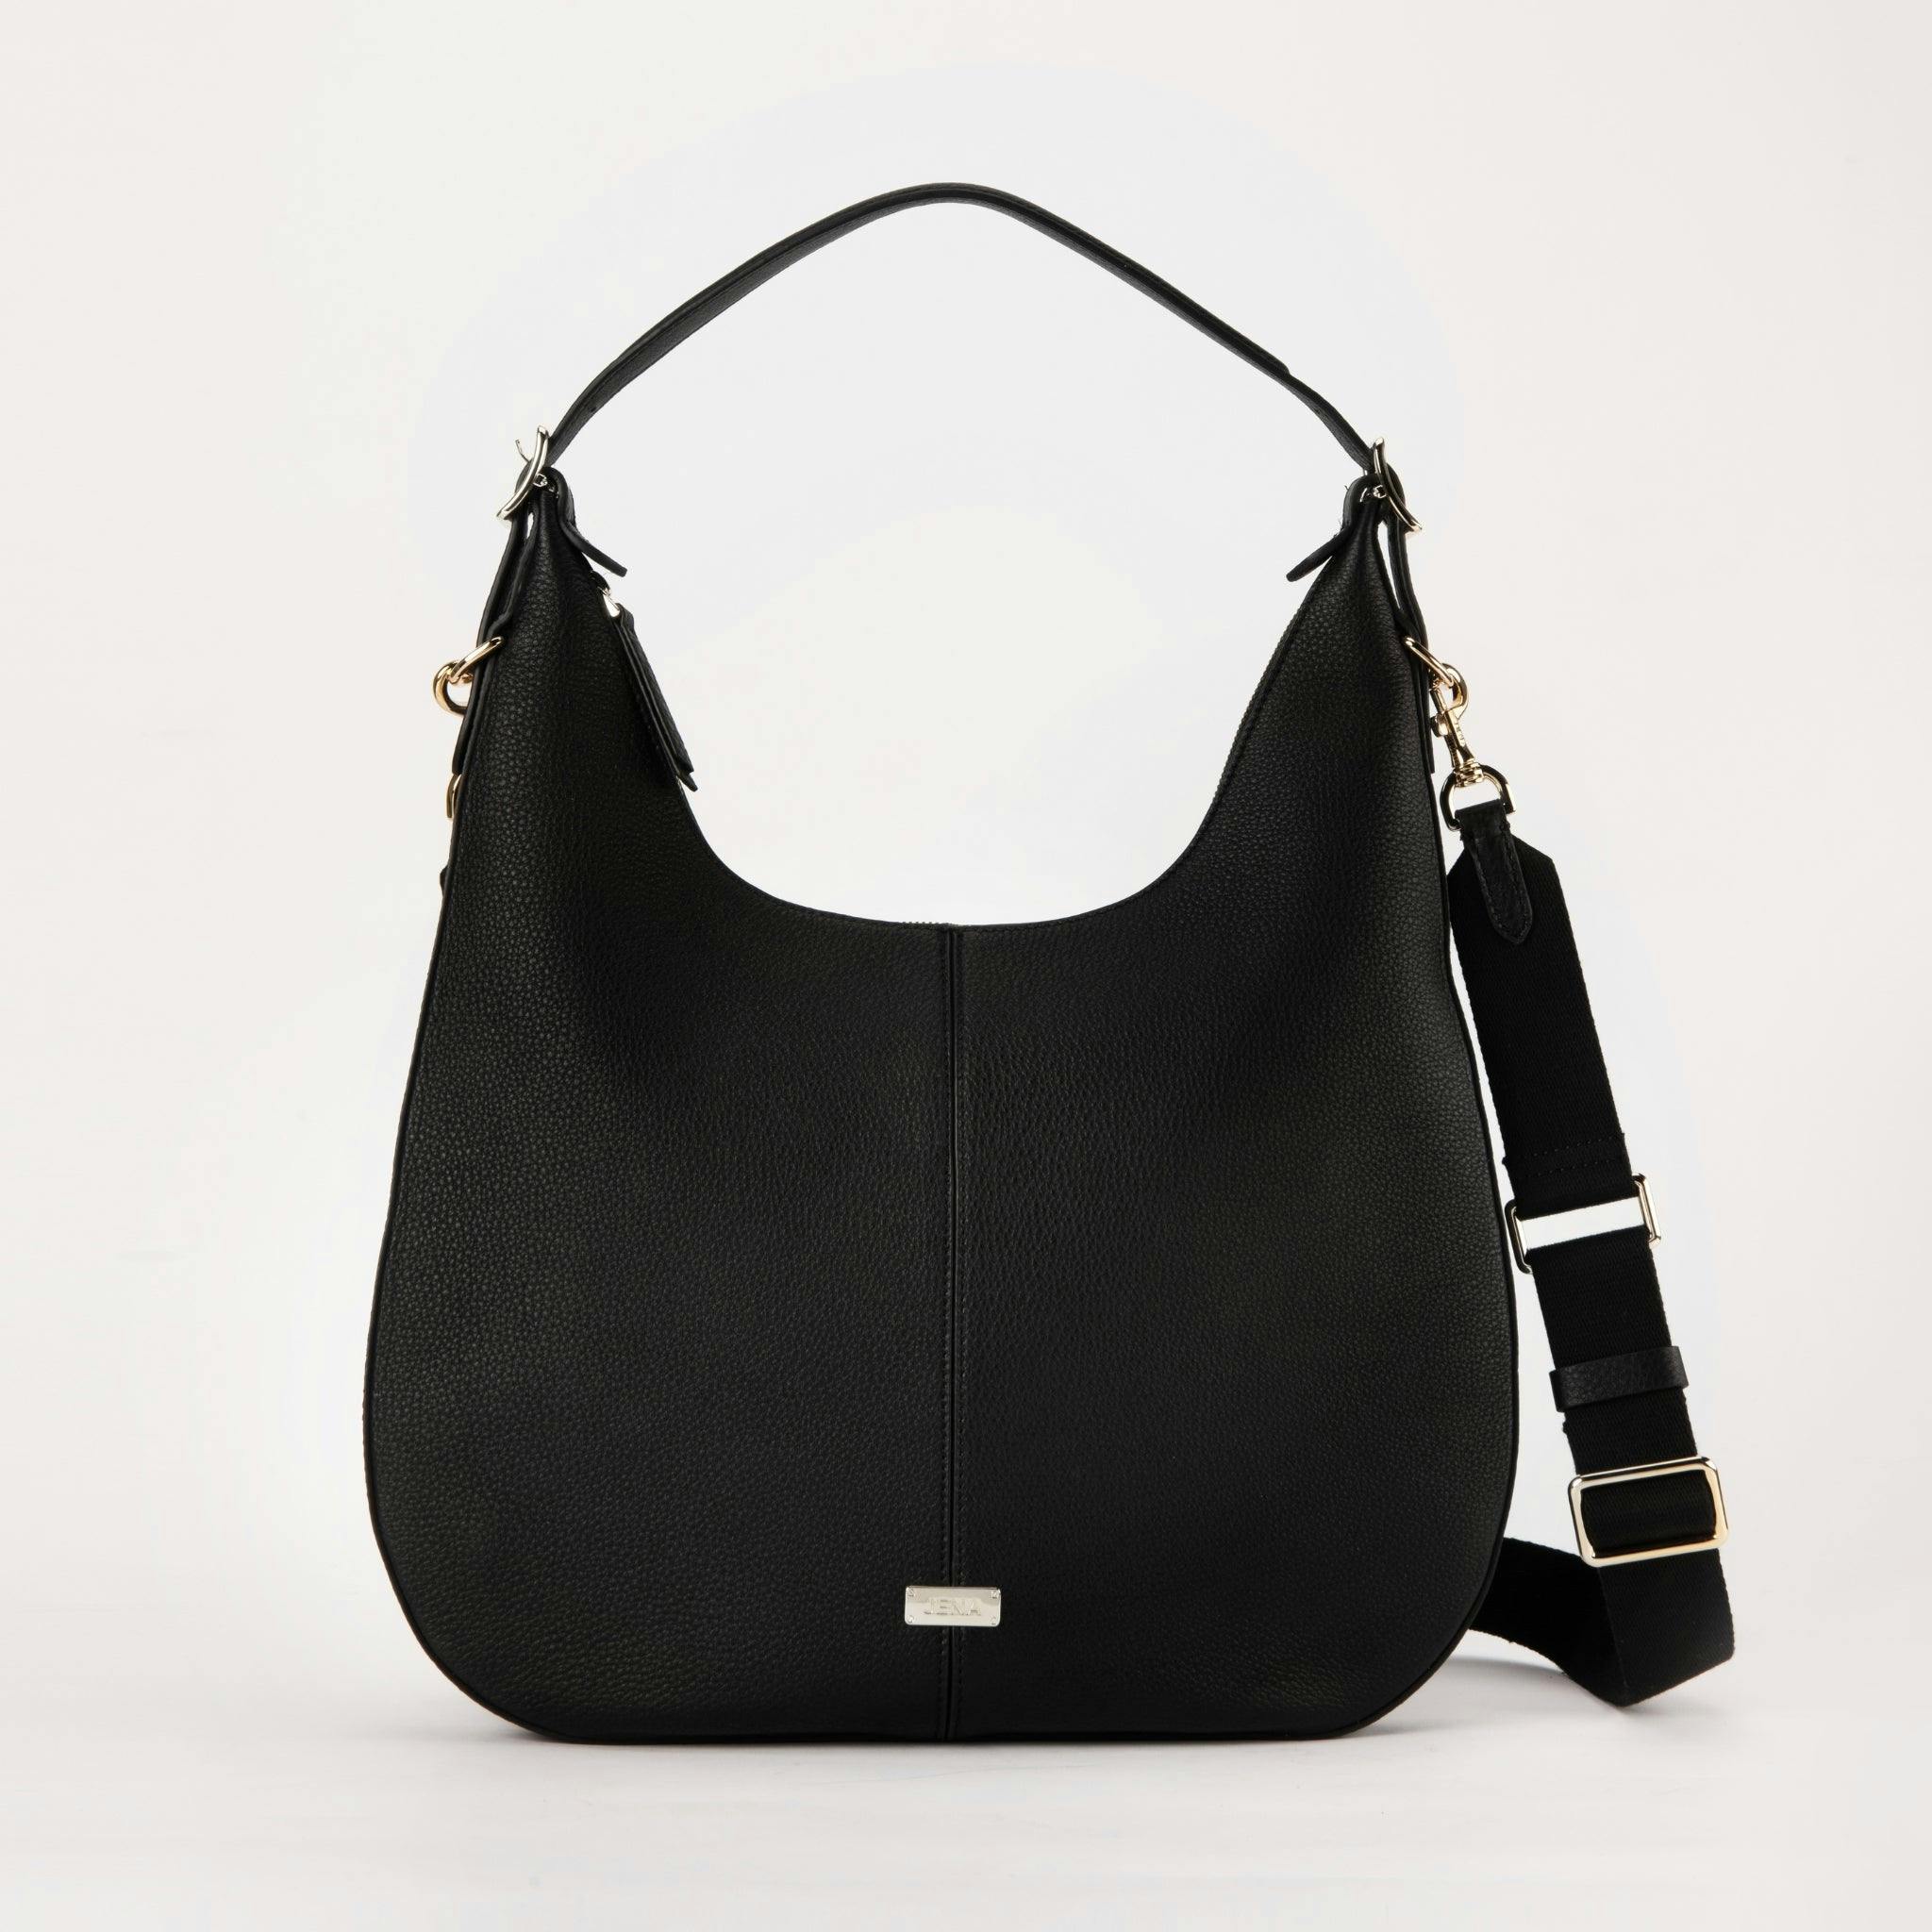 Black Hobo Bag, a product by JENA